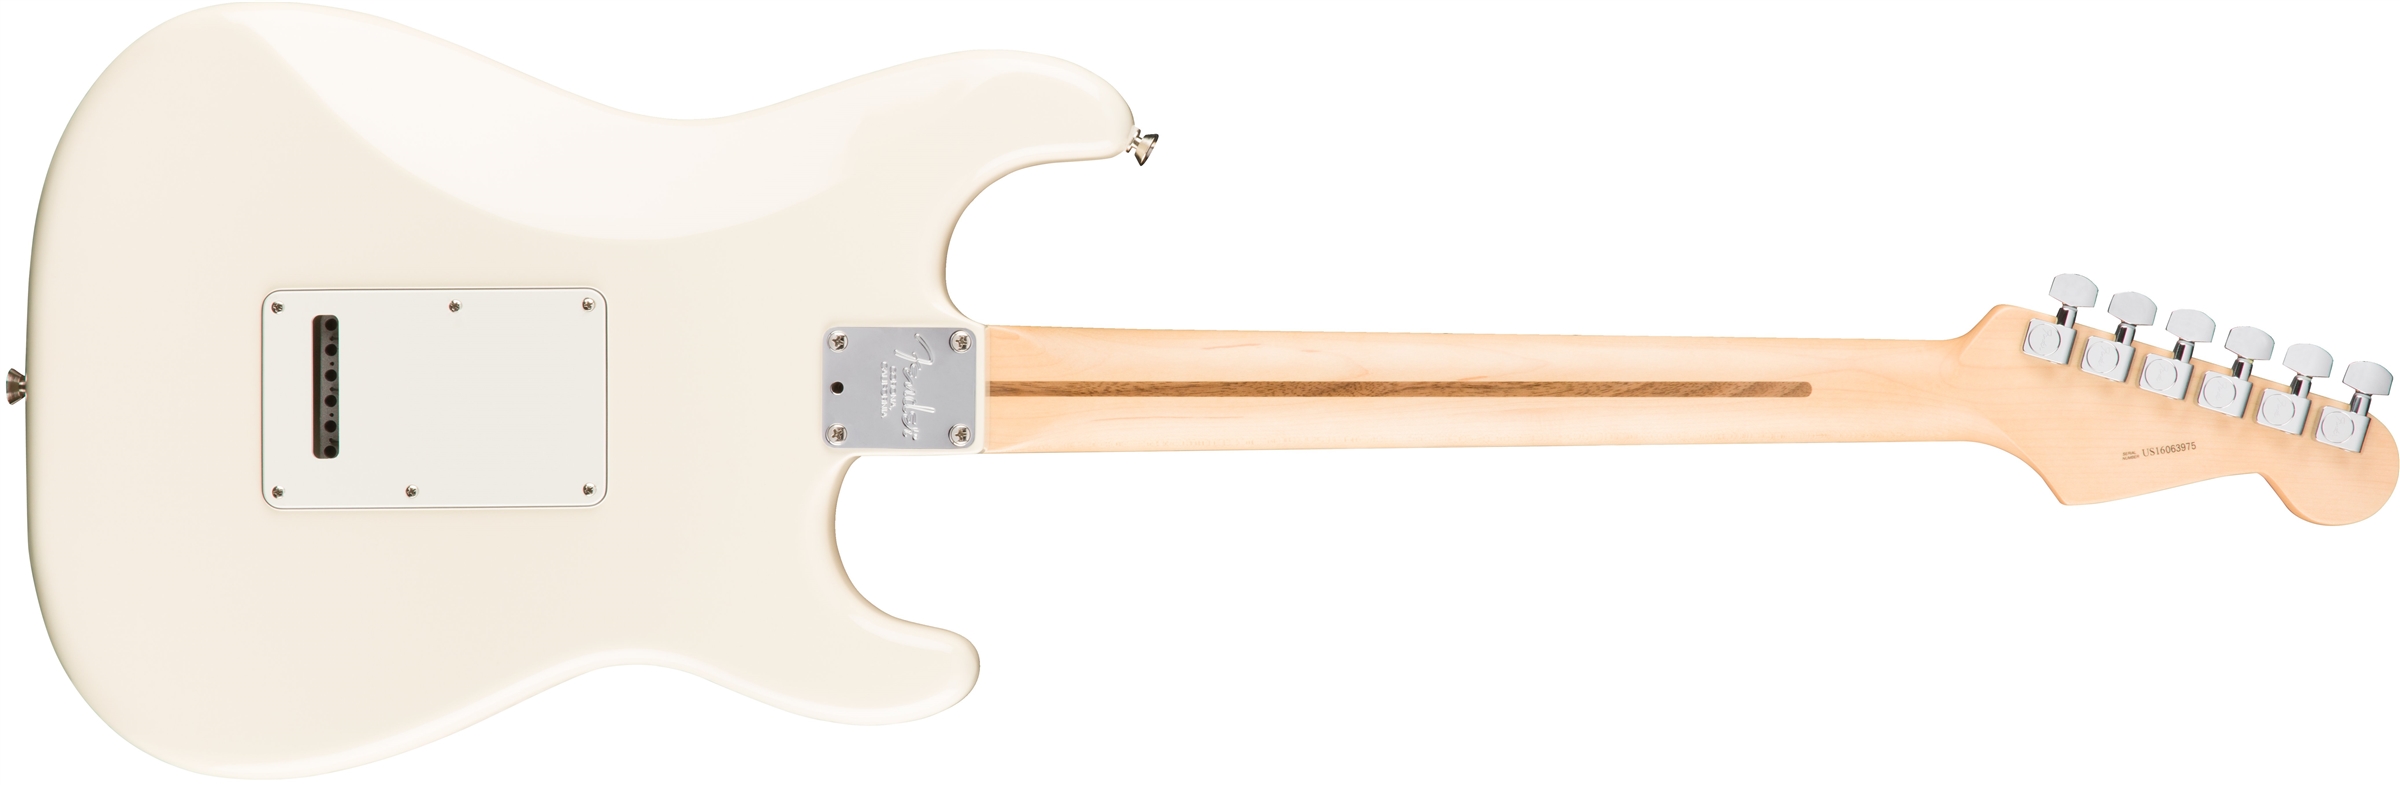 Fender Strat American Professional Lh Usa Gaucher 3s Mn - Olympic White - Guitarra electrica para zurdos - Variation 1